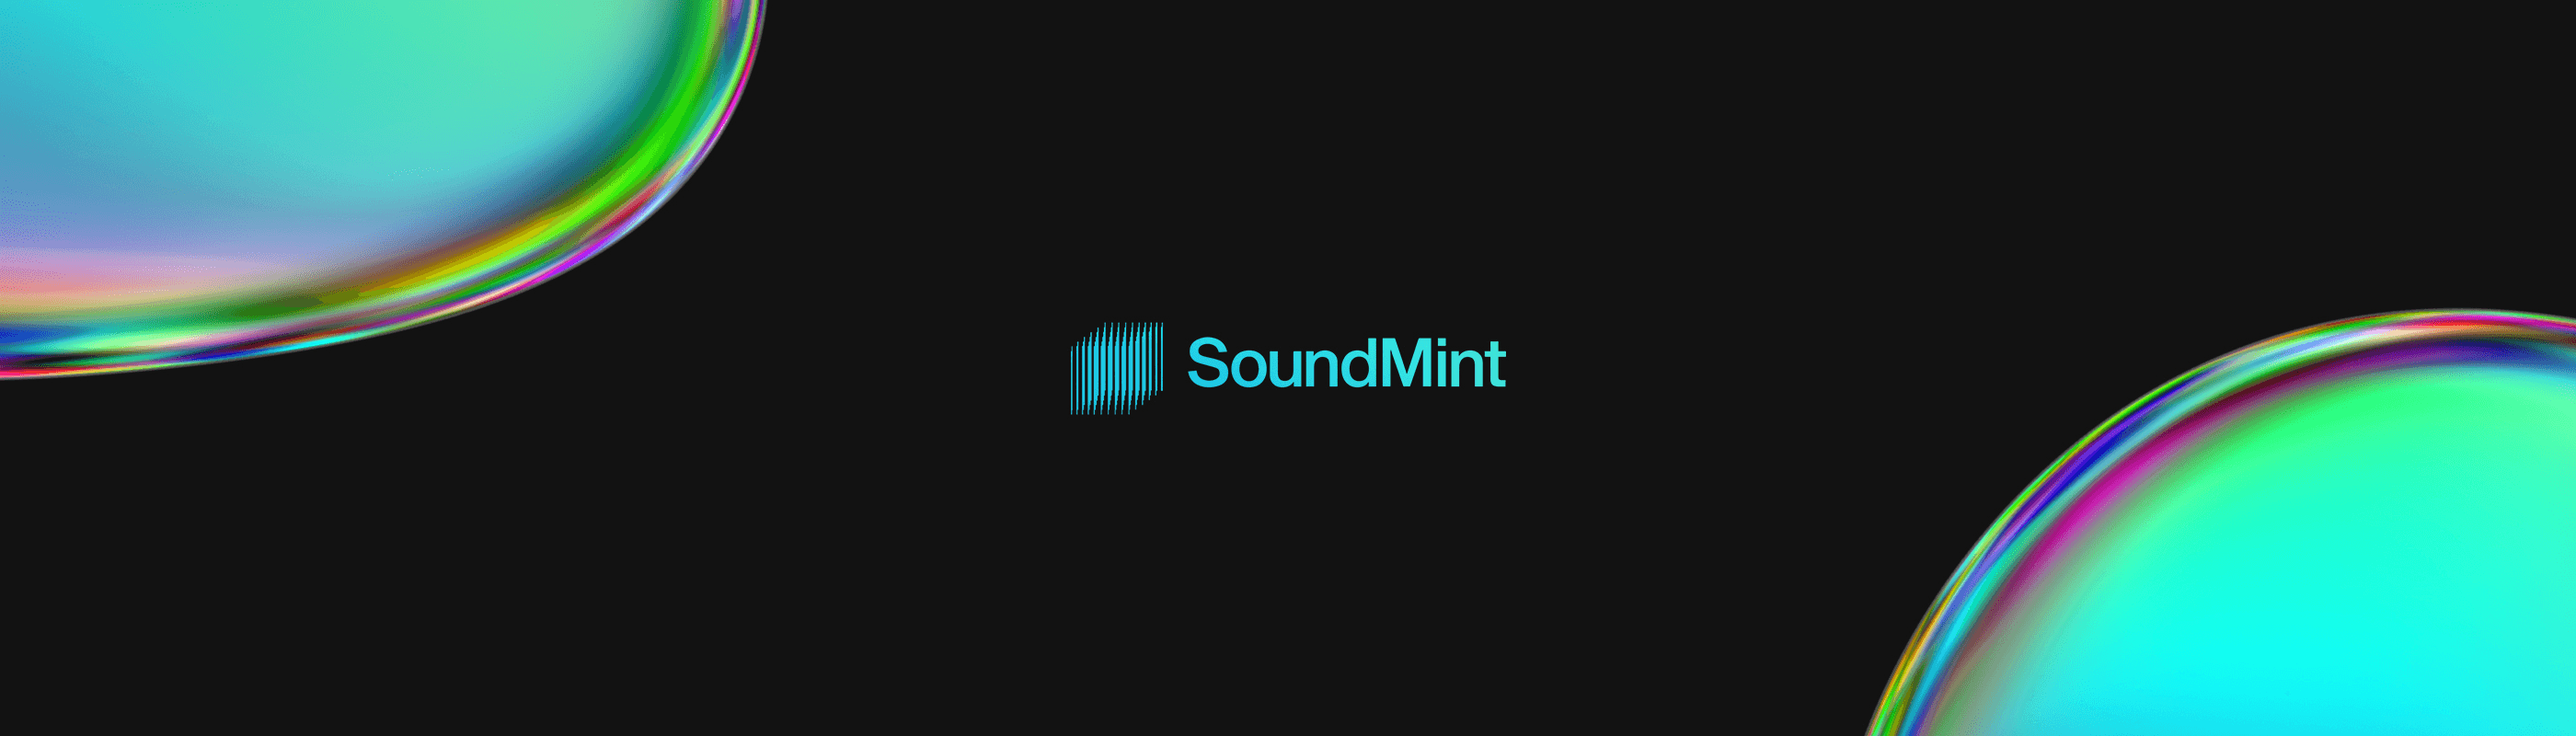 SoundMint 橫幅